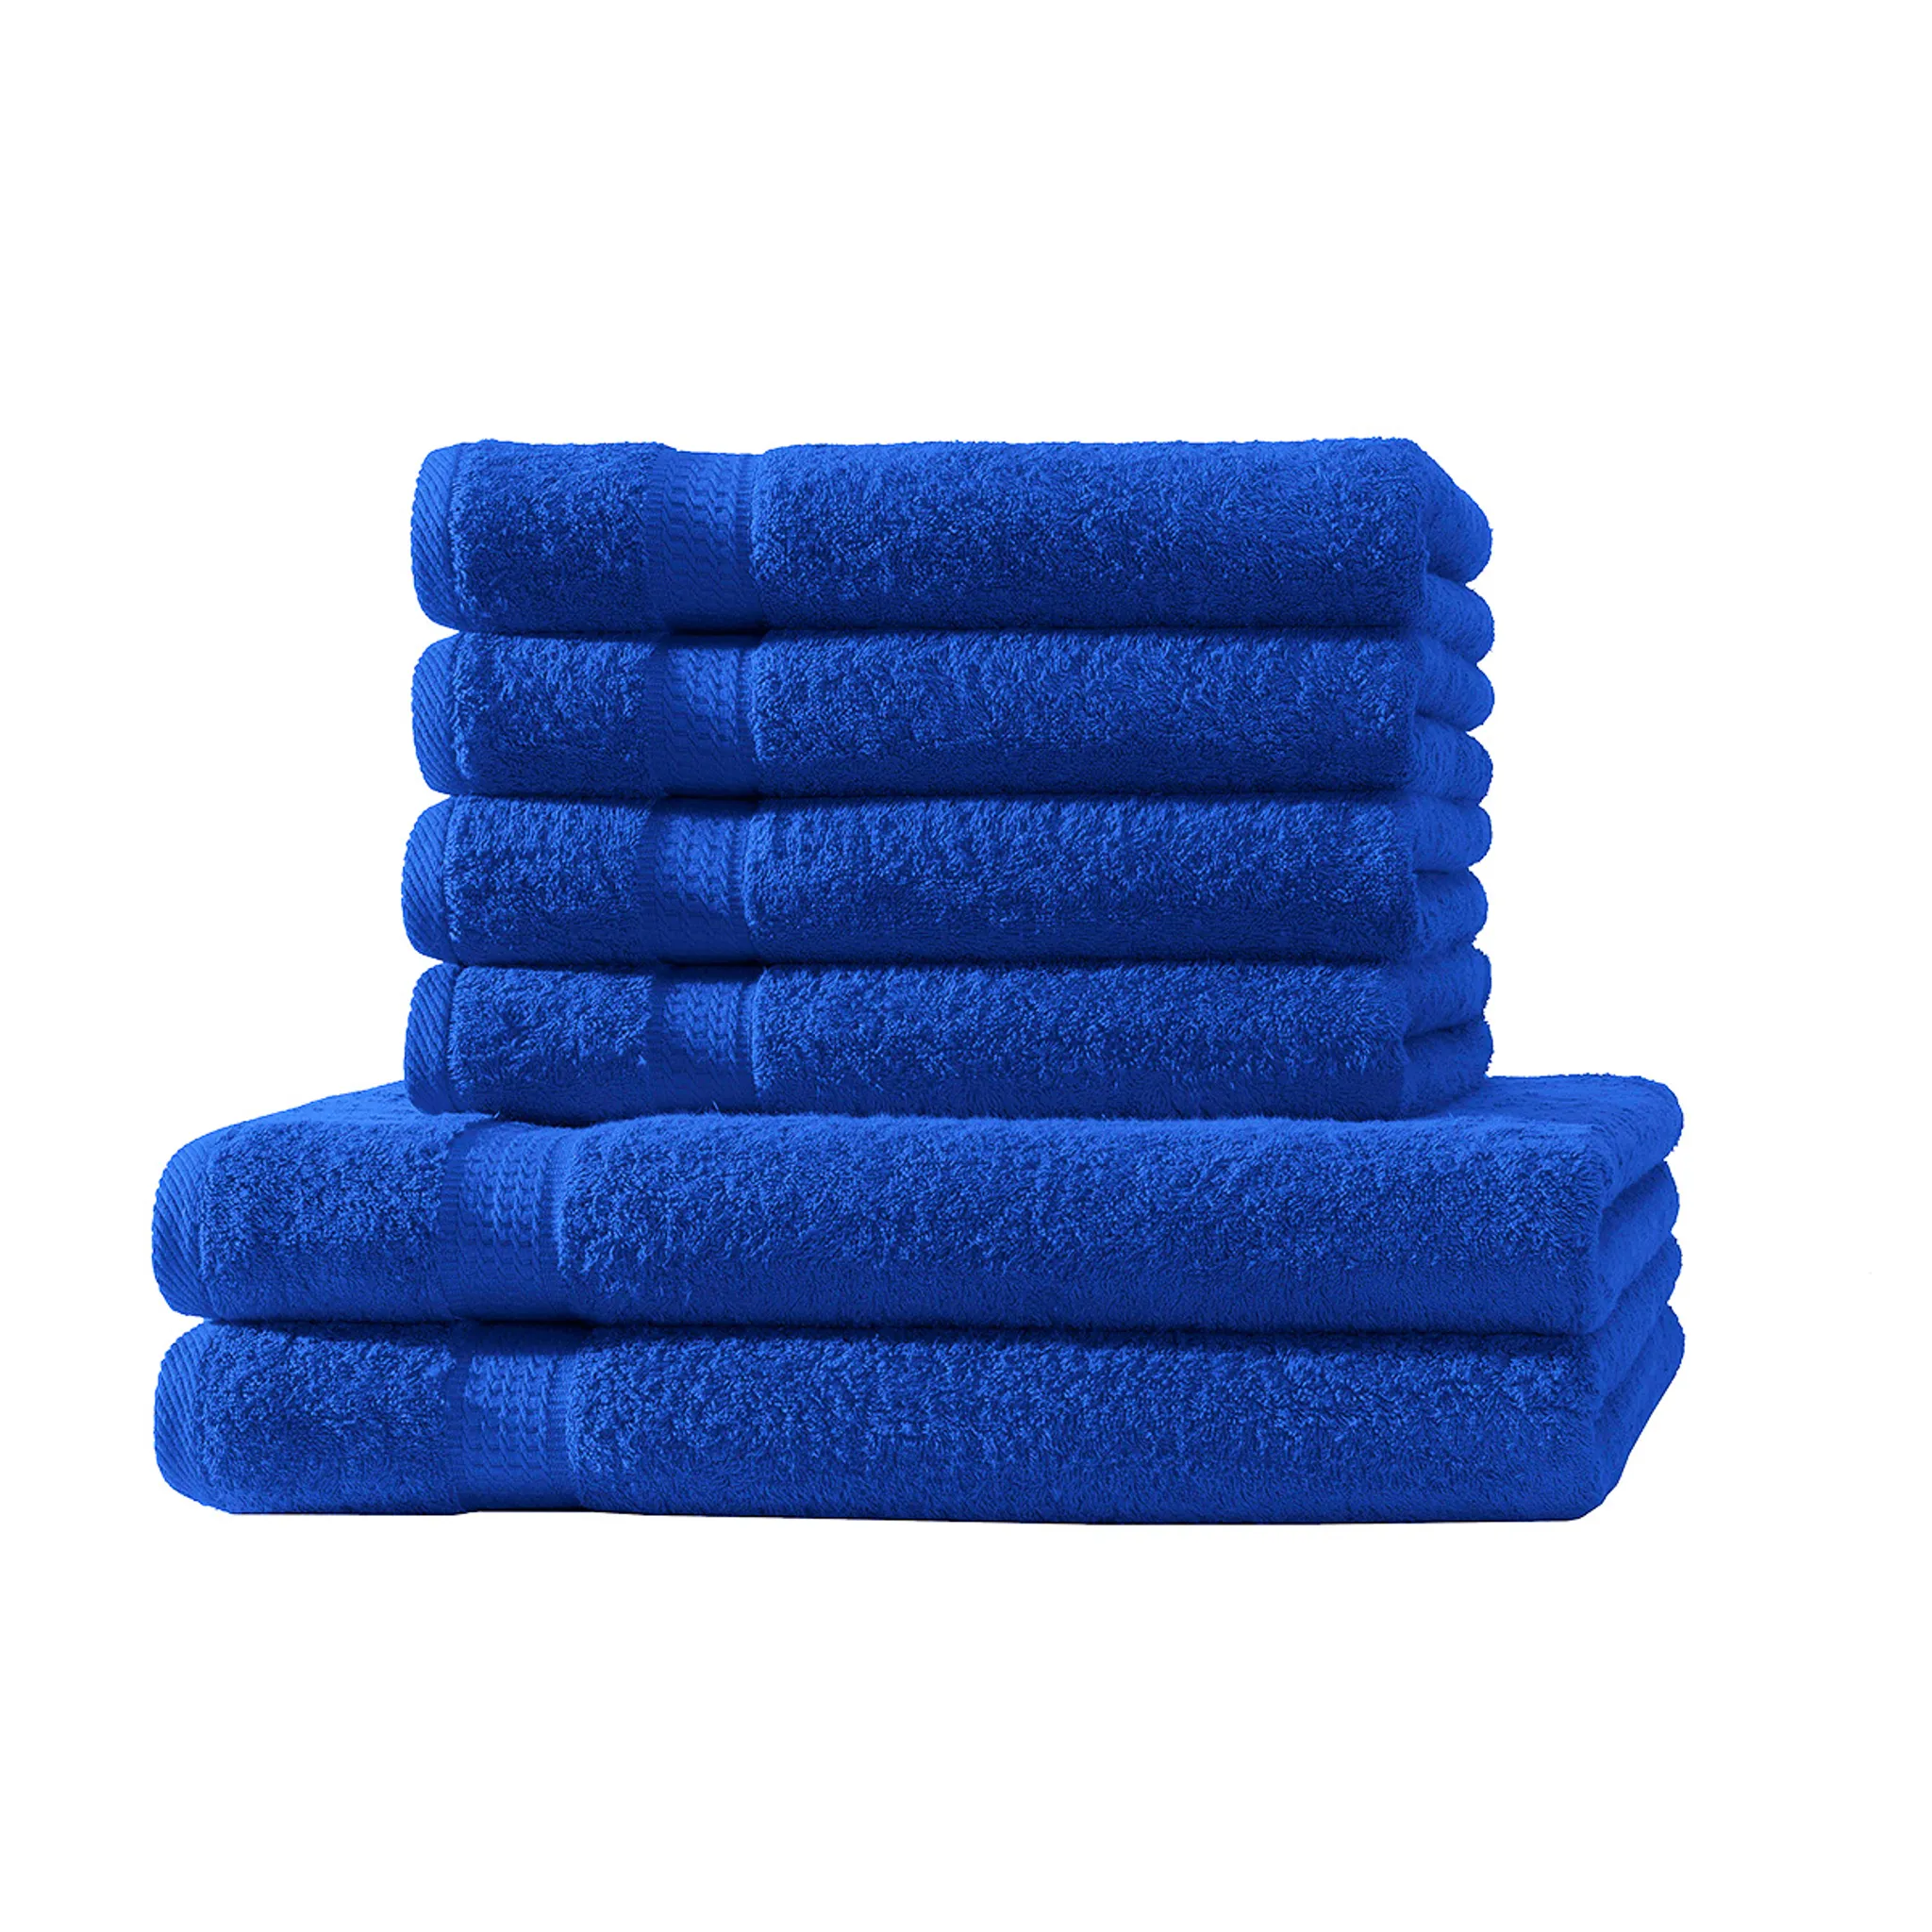 500g/m² - Blau tlg. 6 Set Handtuch Royal -